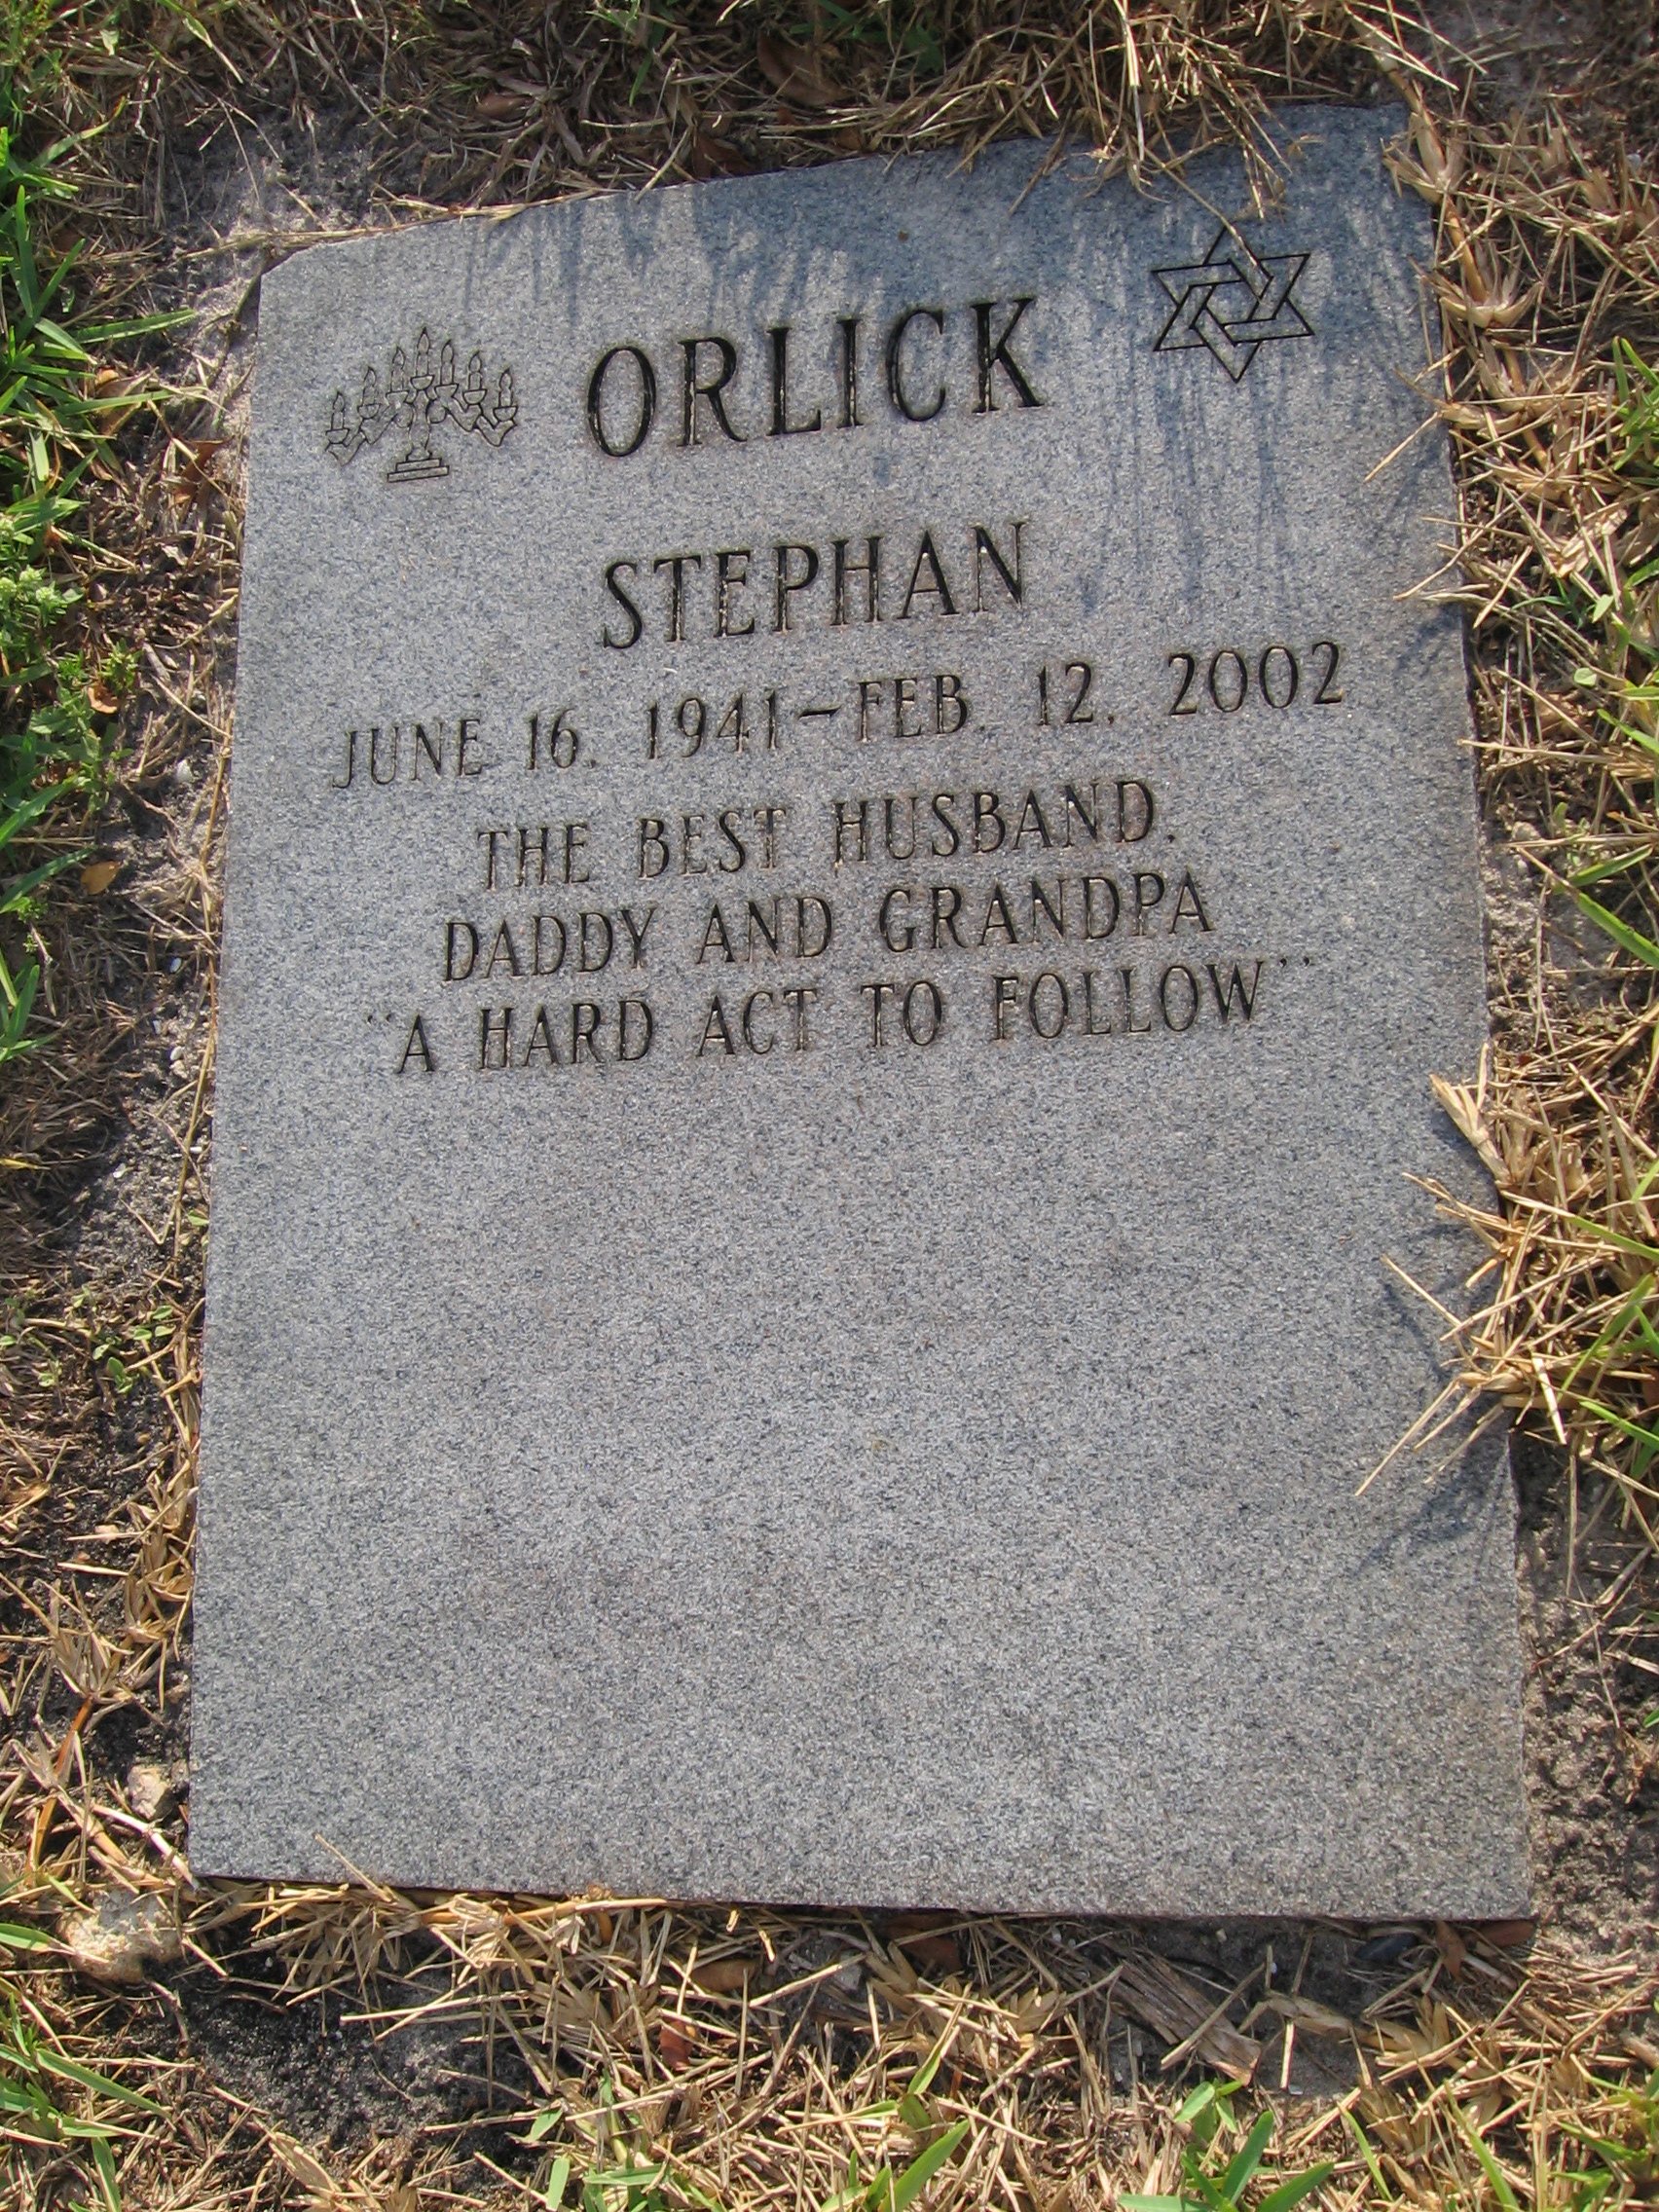 Stephan Orlick